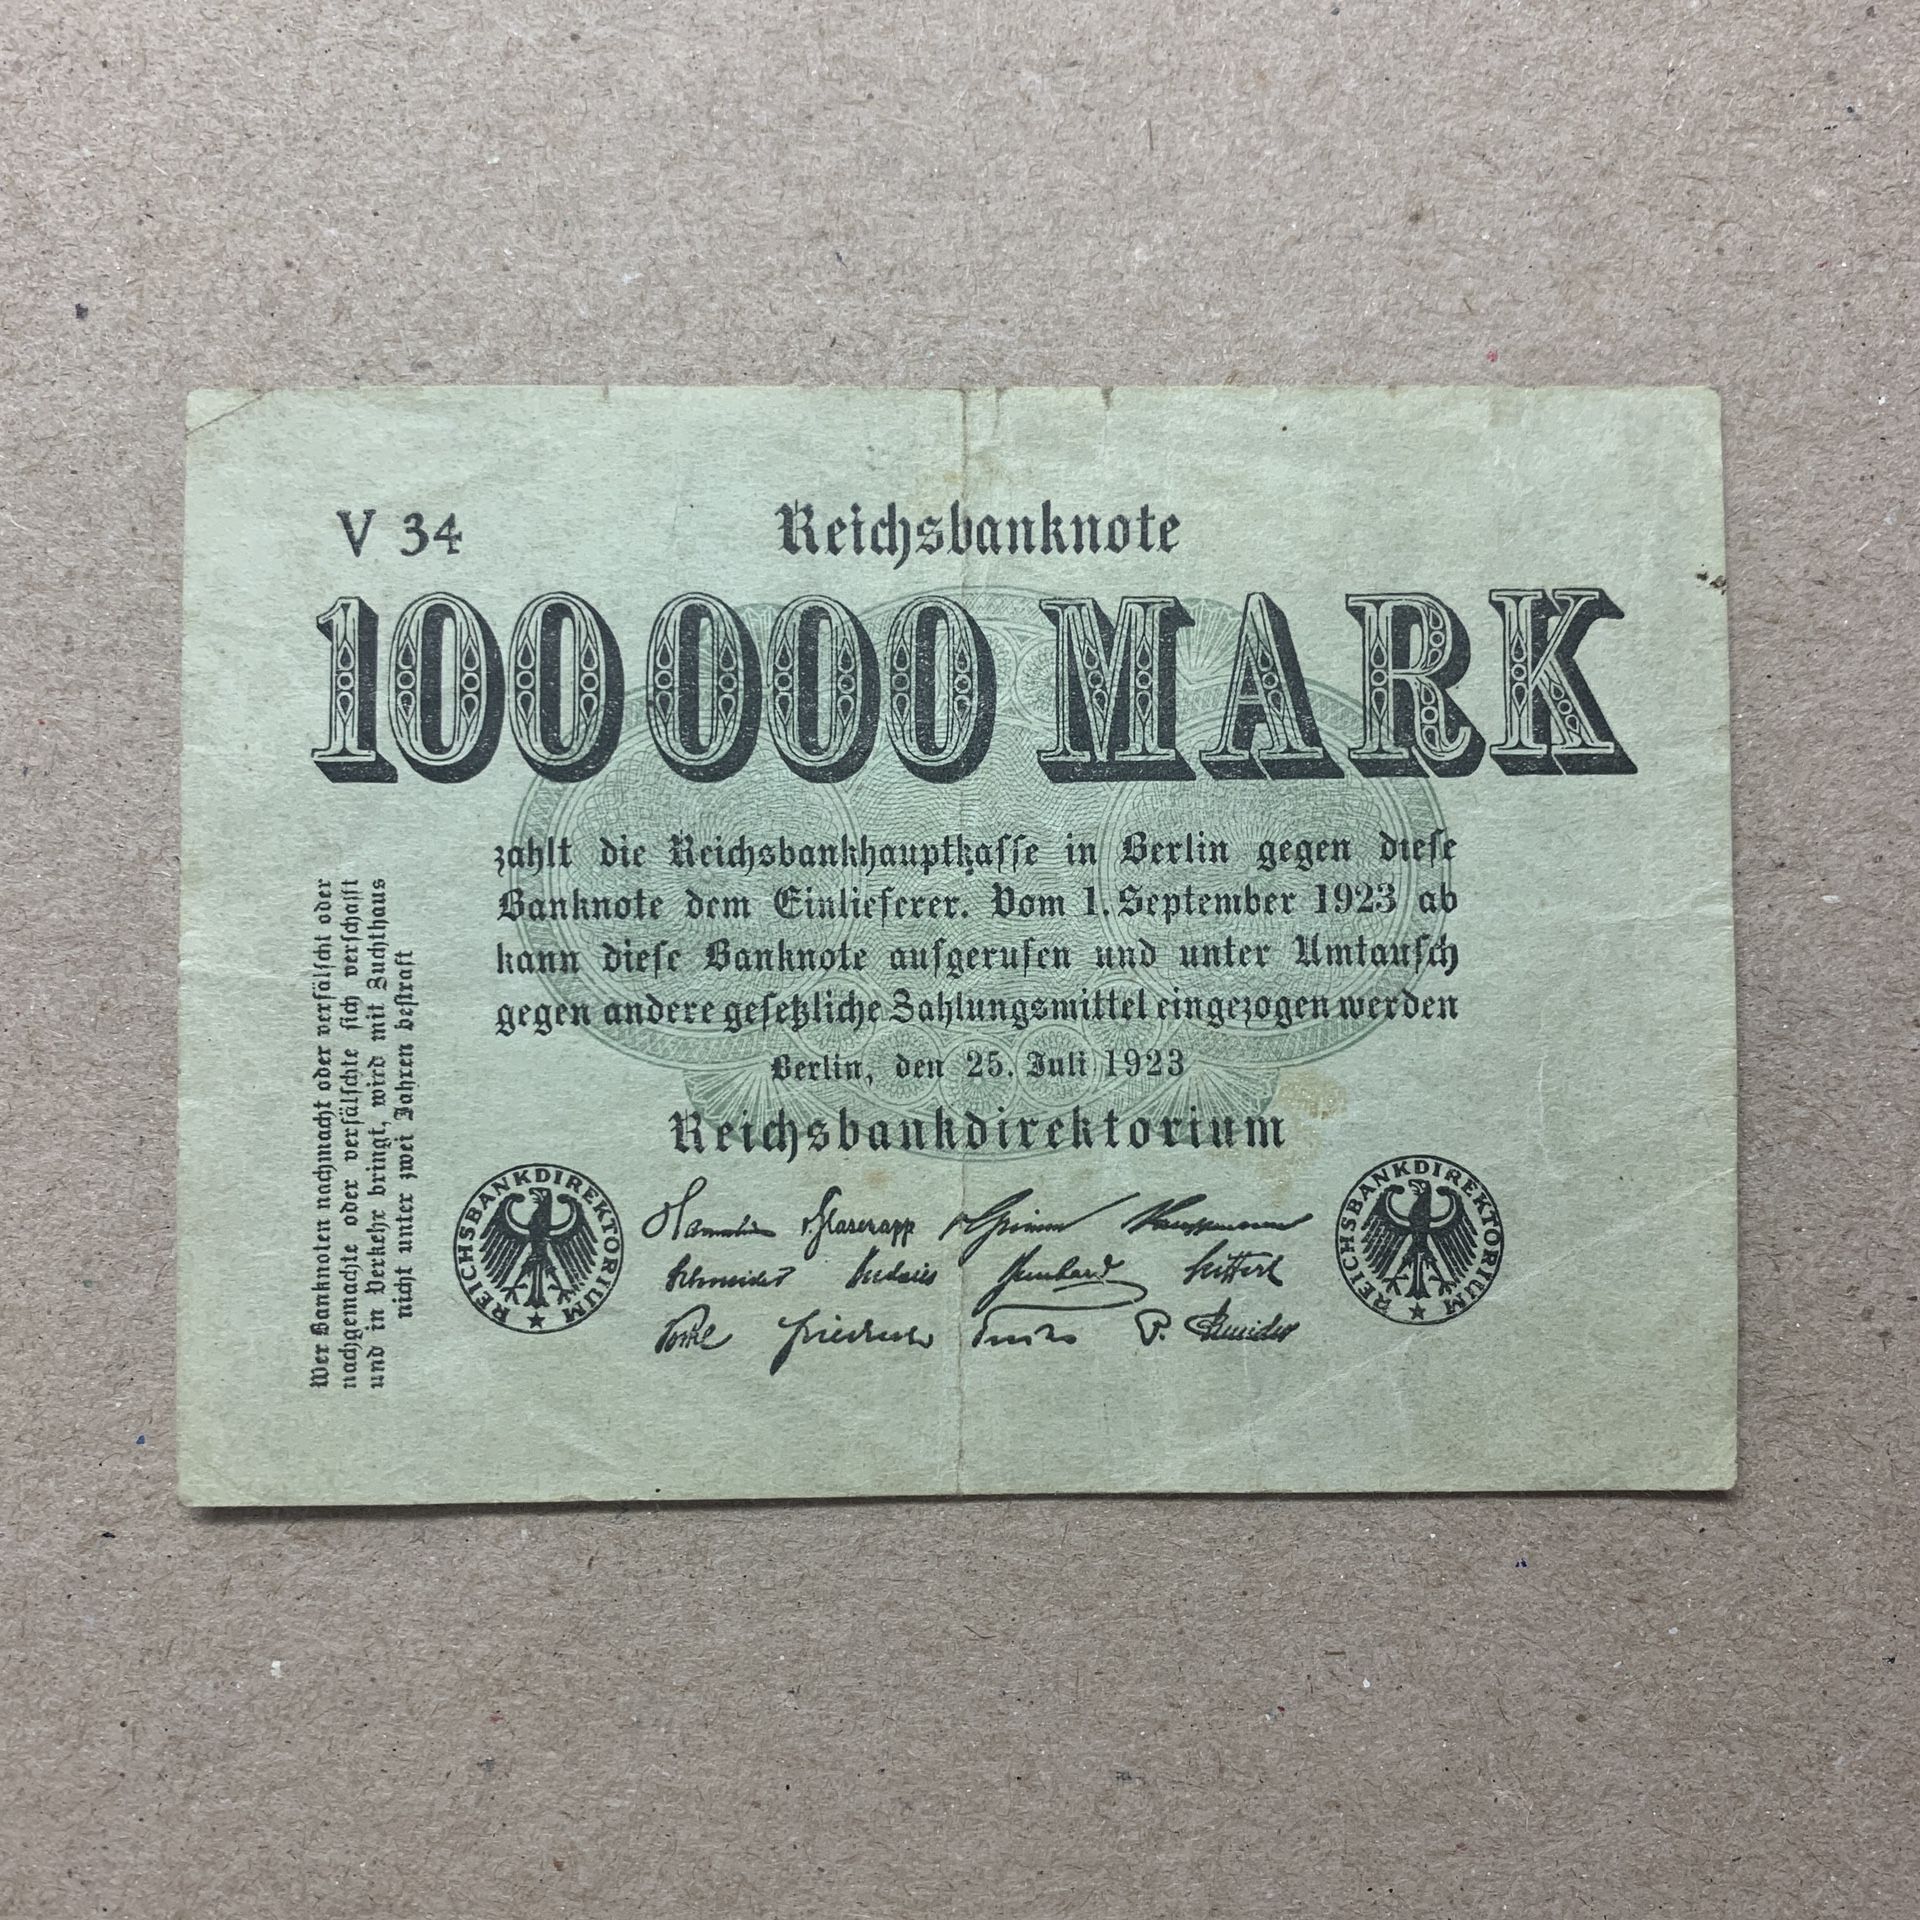 1920’s German Mark Banknote, Germany Currency Era Between WWI, WW1. WW2 Memorabilia WWII. Almost 100 Years Old Vintage Historic Note. Beautiful Bill.